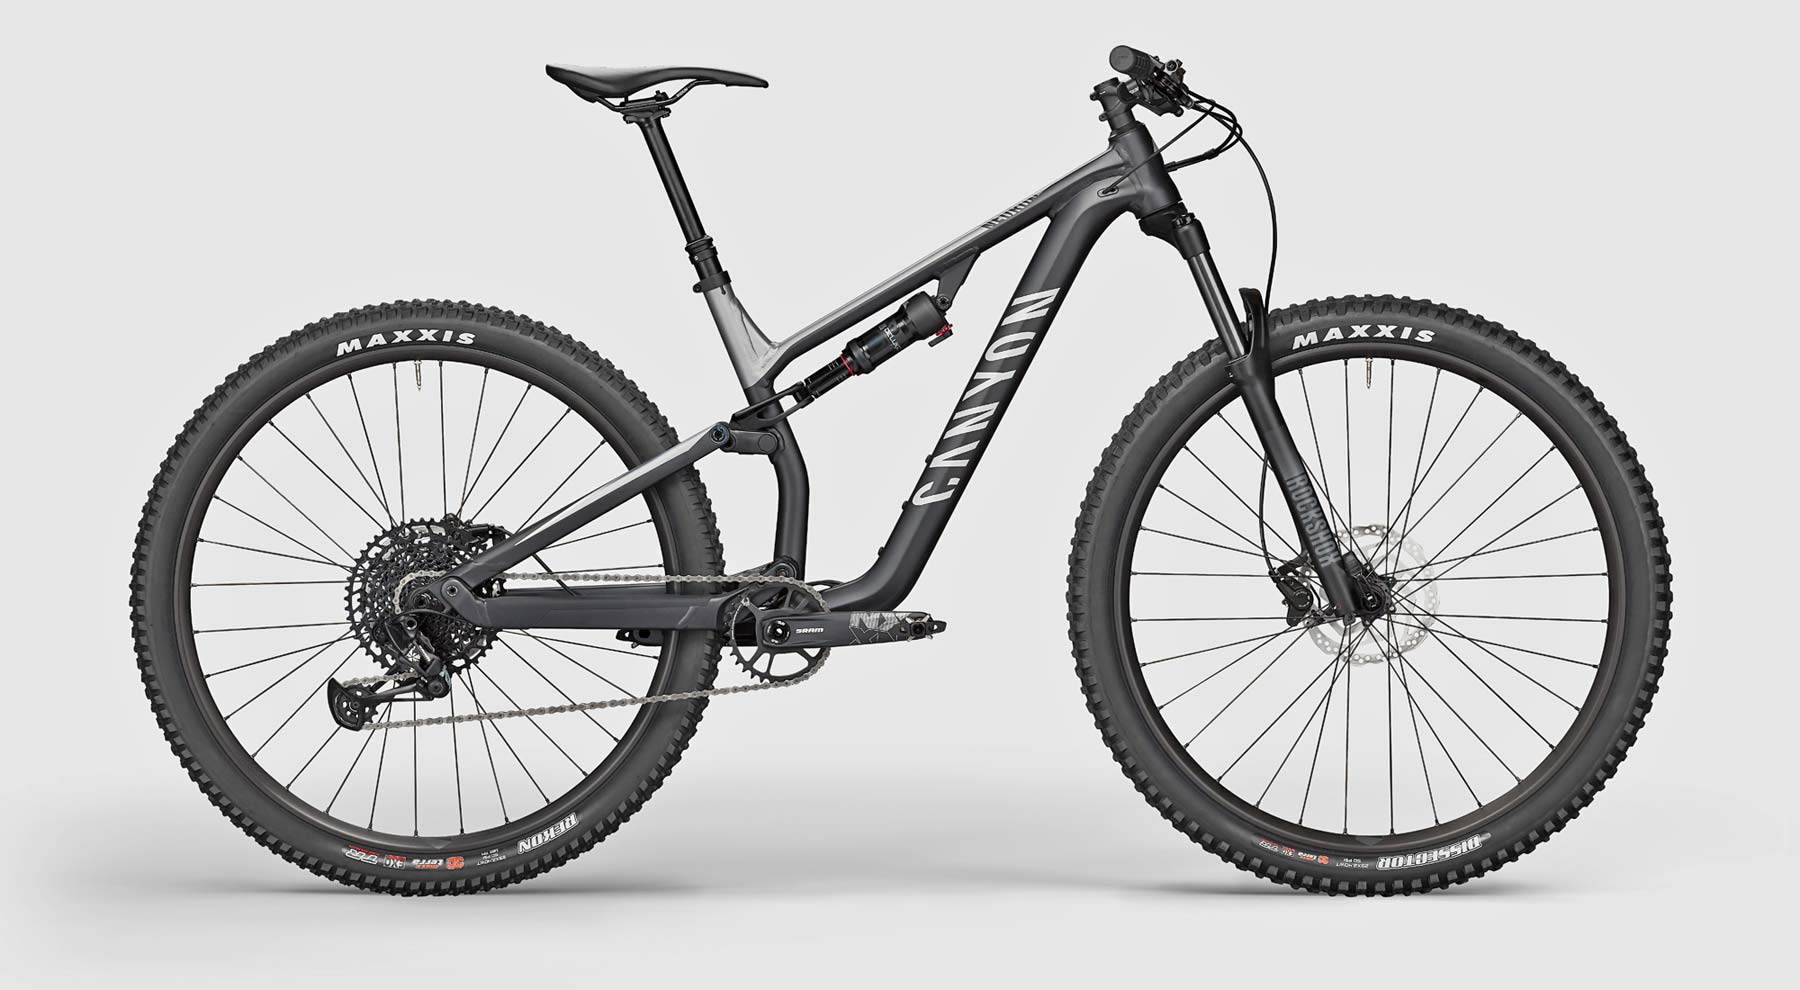 2021 Canyon Neuron mountain bike, 29er 27.5" 130mm all-mountain trail bike in alloy or carbon, 6